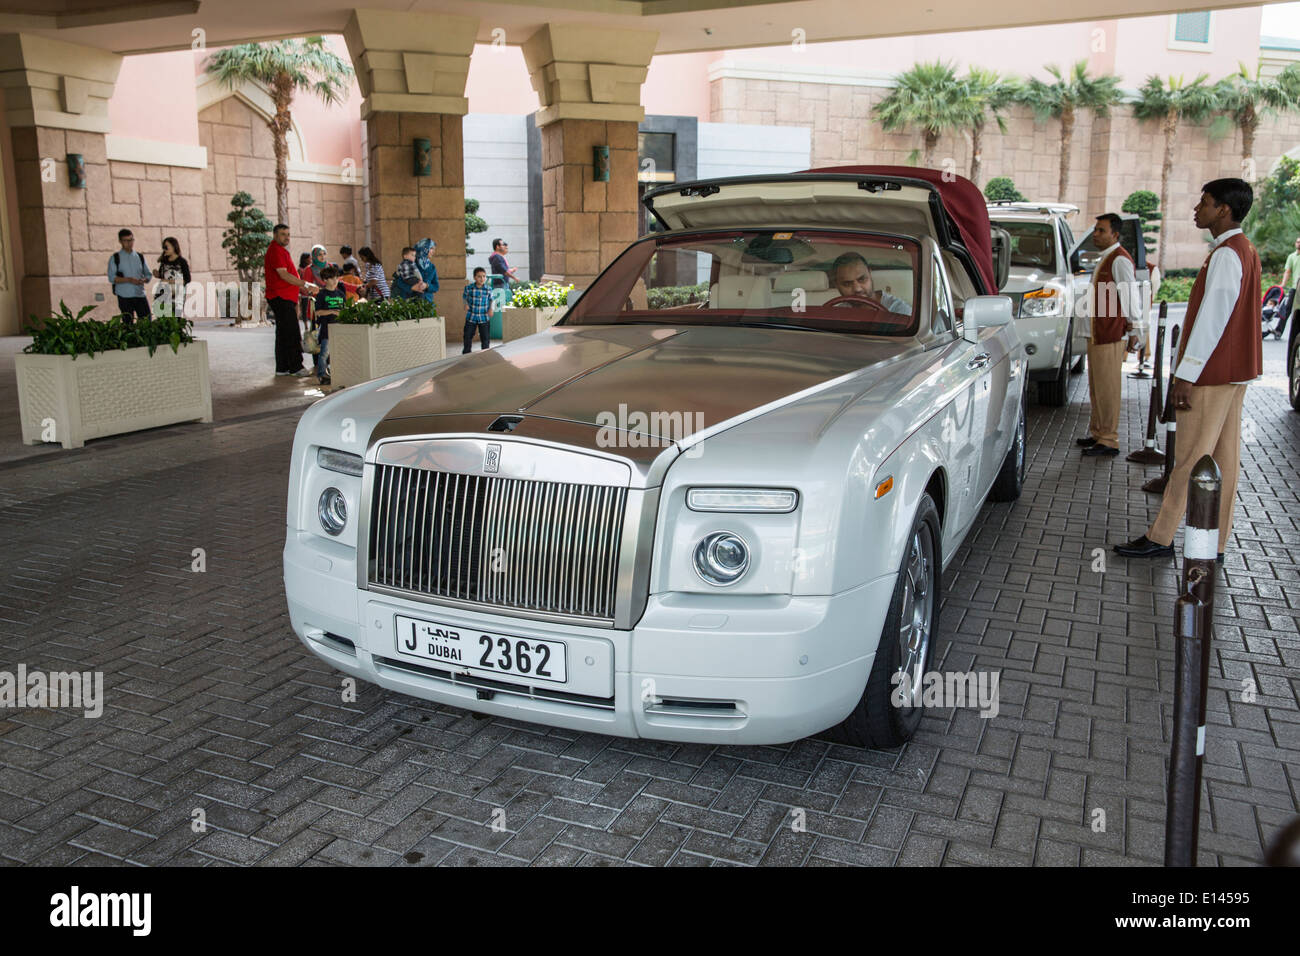 Emirati Arabi Uniti Dubai, Rolls Royce arriva a Atlantis Hotel su Palm Jumeirah Foto Stock